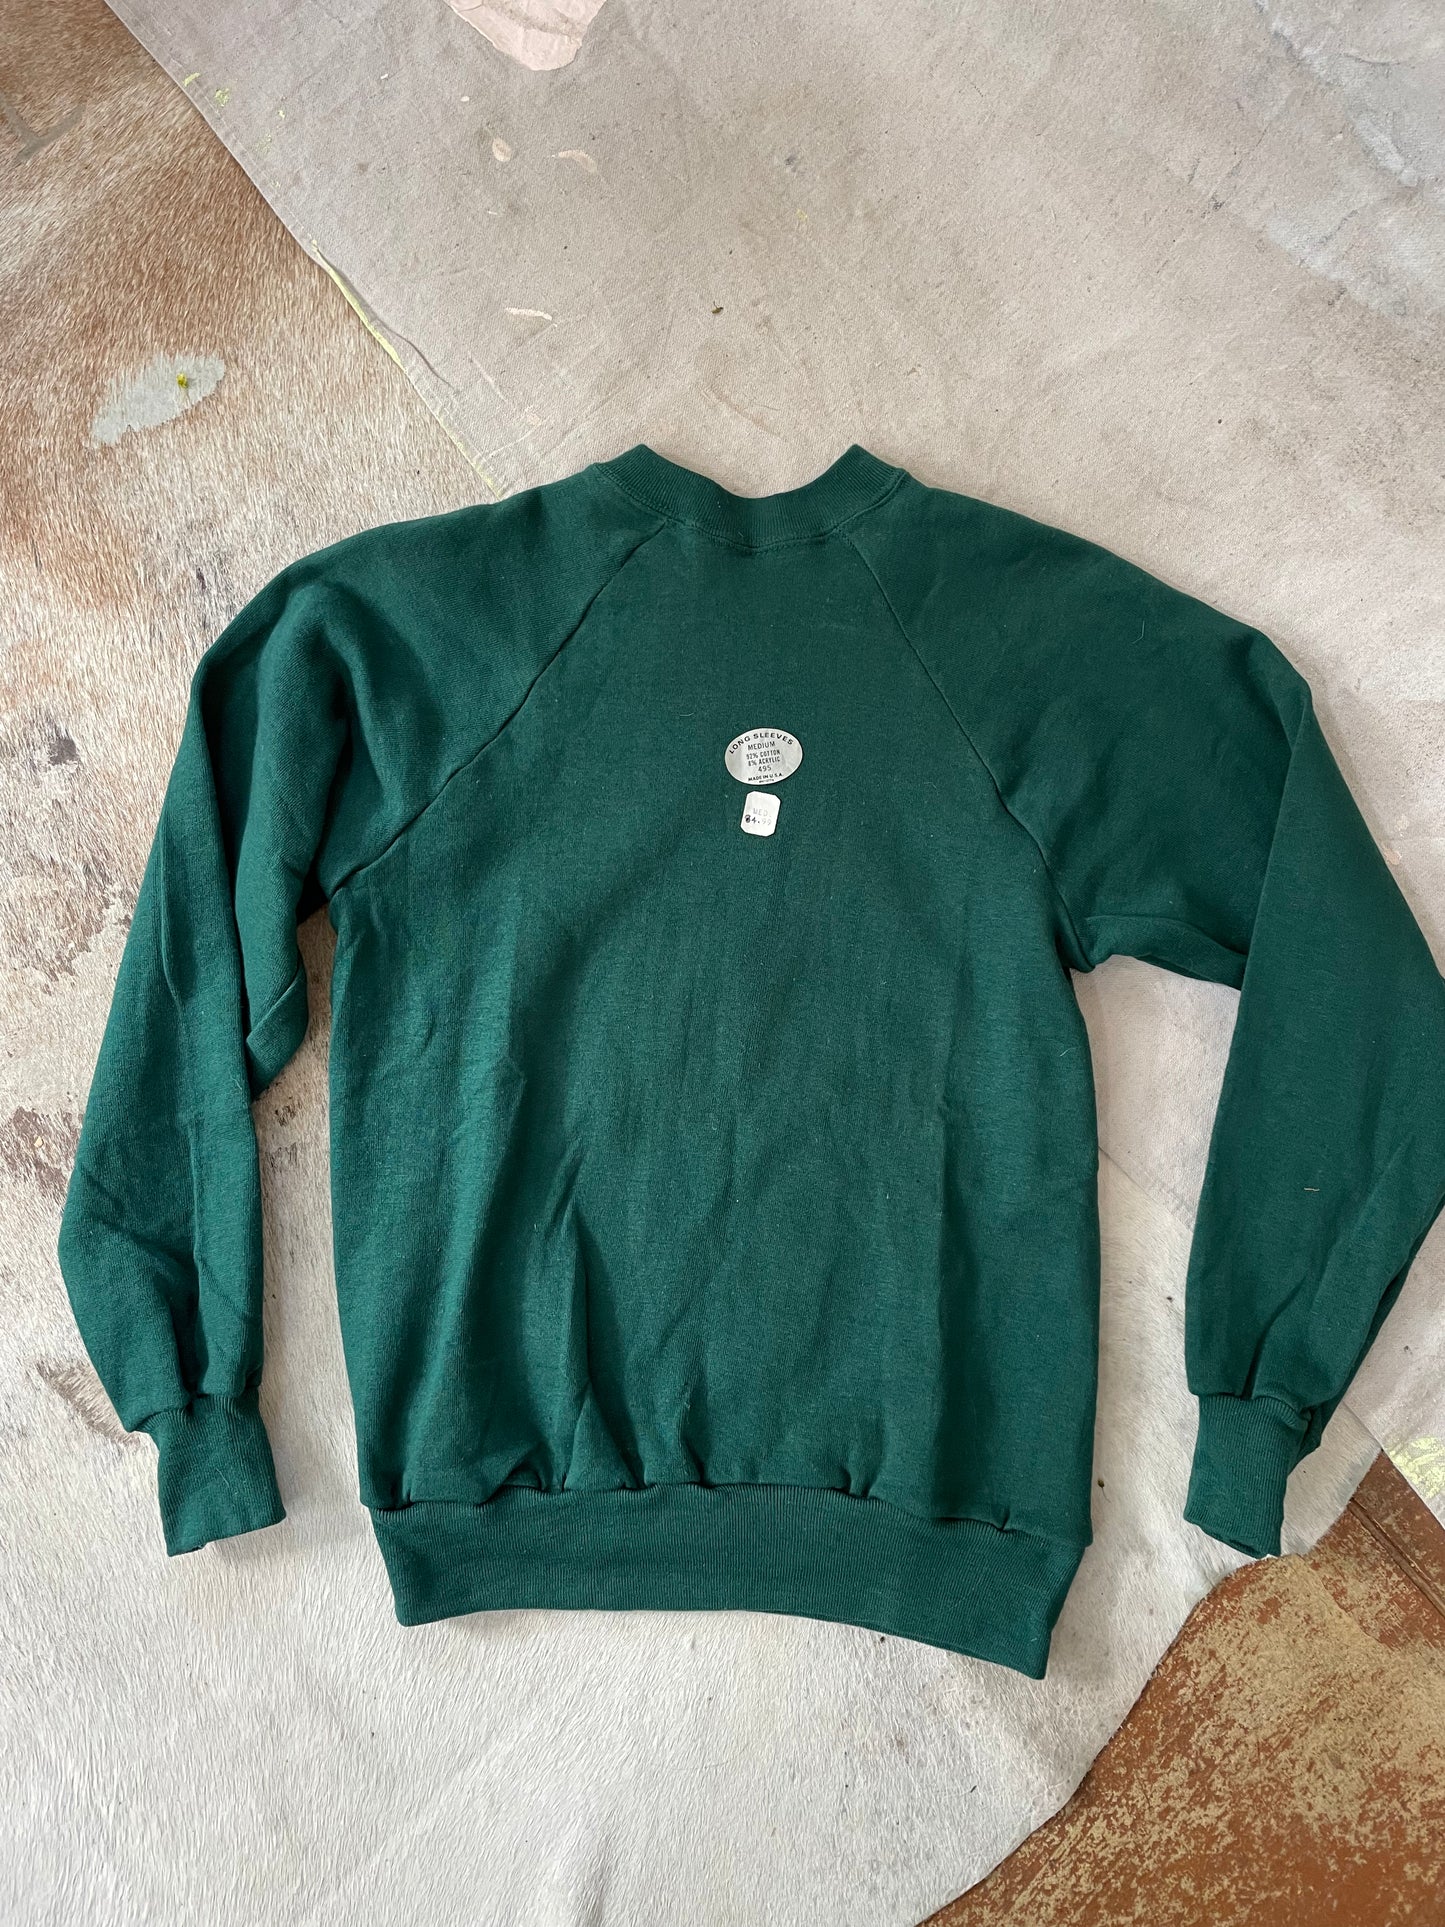 70s/80s Deadstock Blank Evergreen Sweatshirt